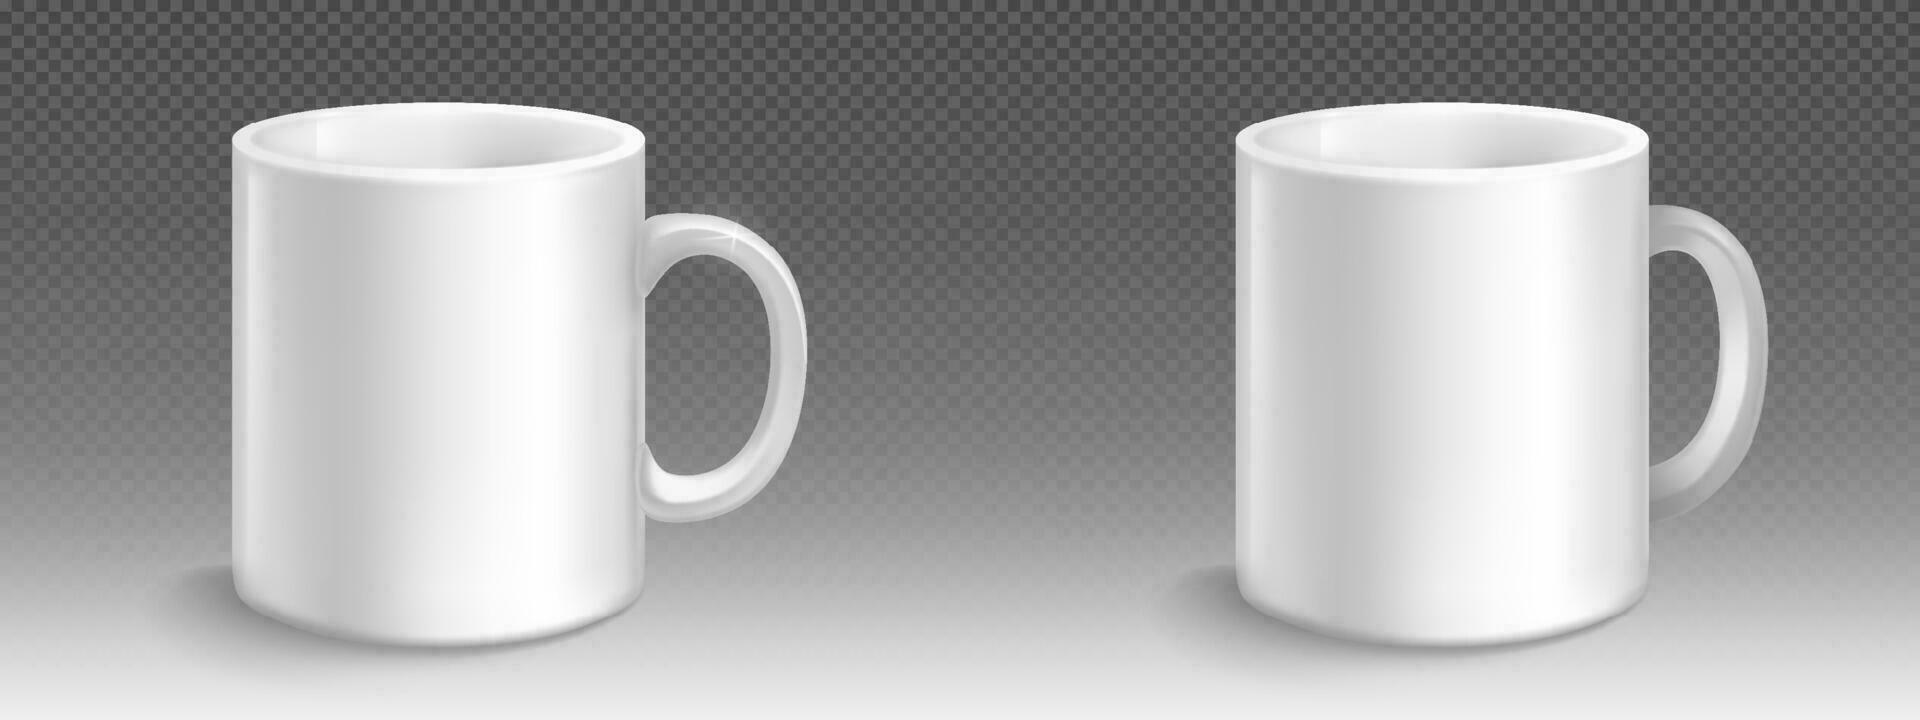 Realistic set of white mug mockups vector